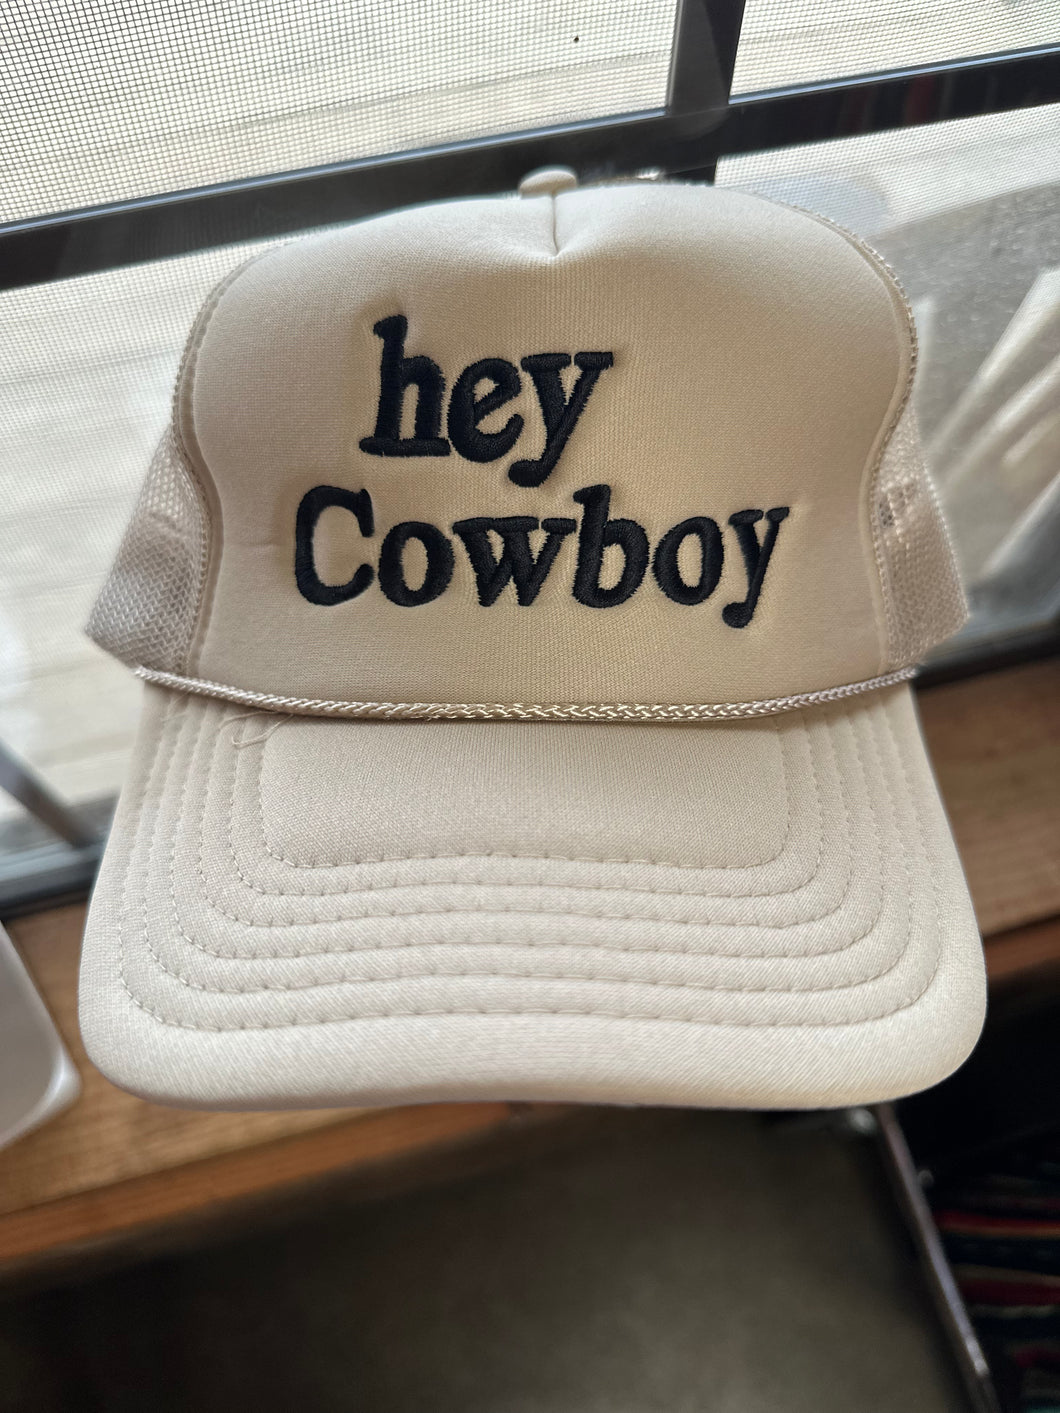 THE HEY COWBOY TRUCKER HAT